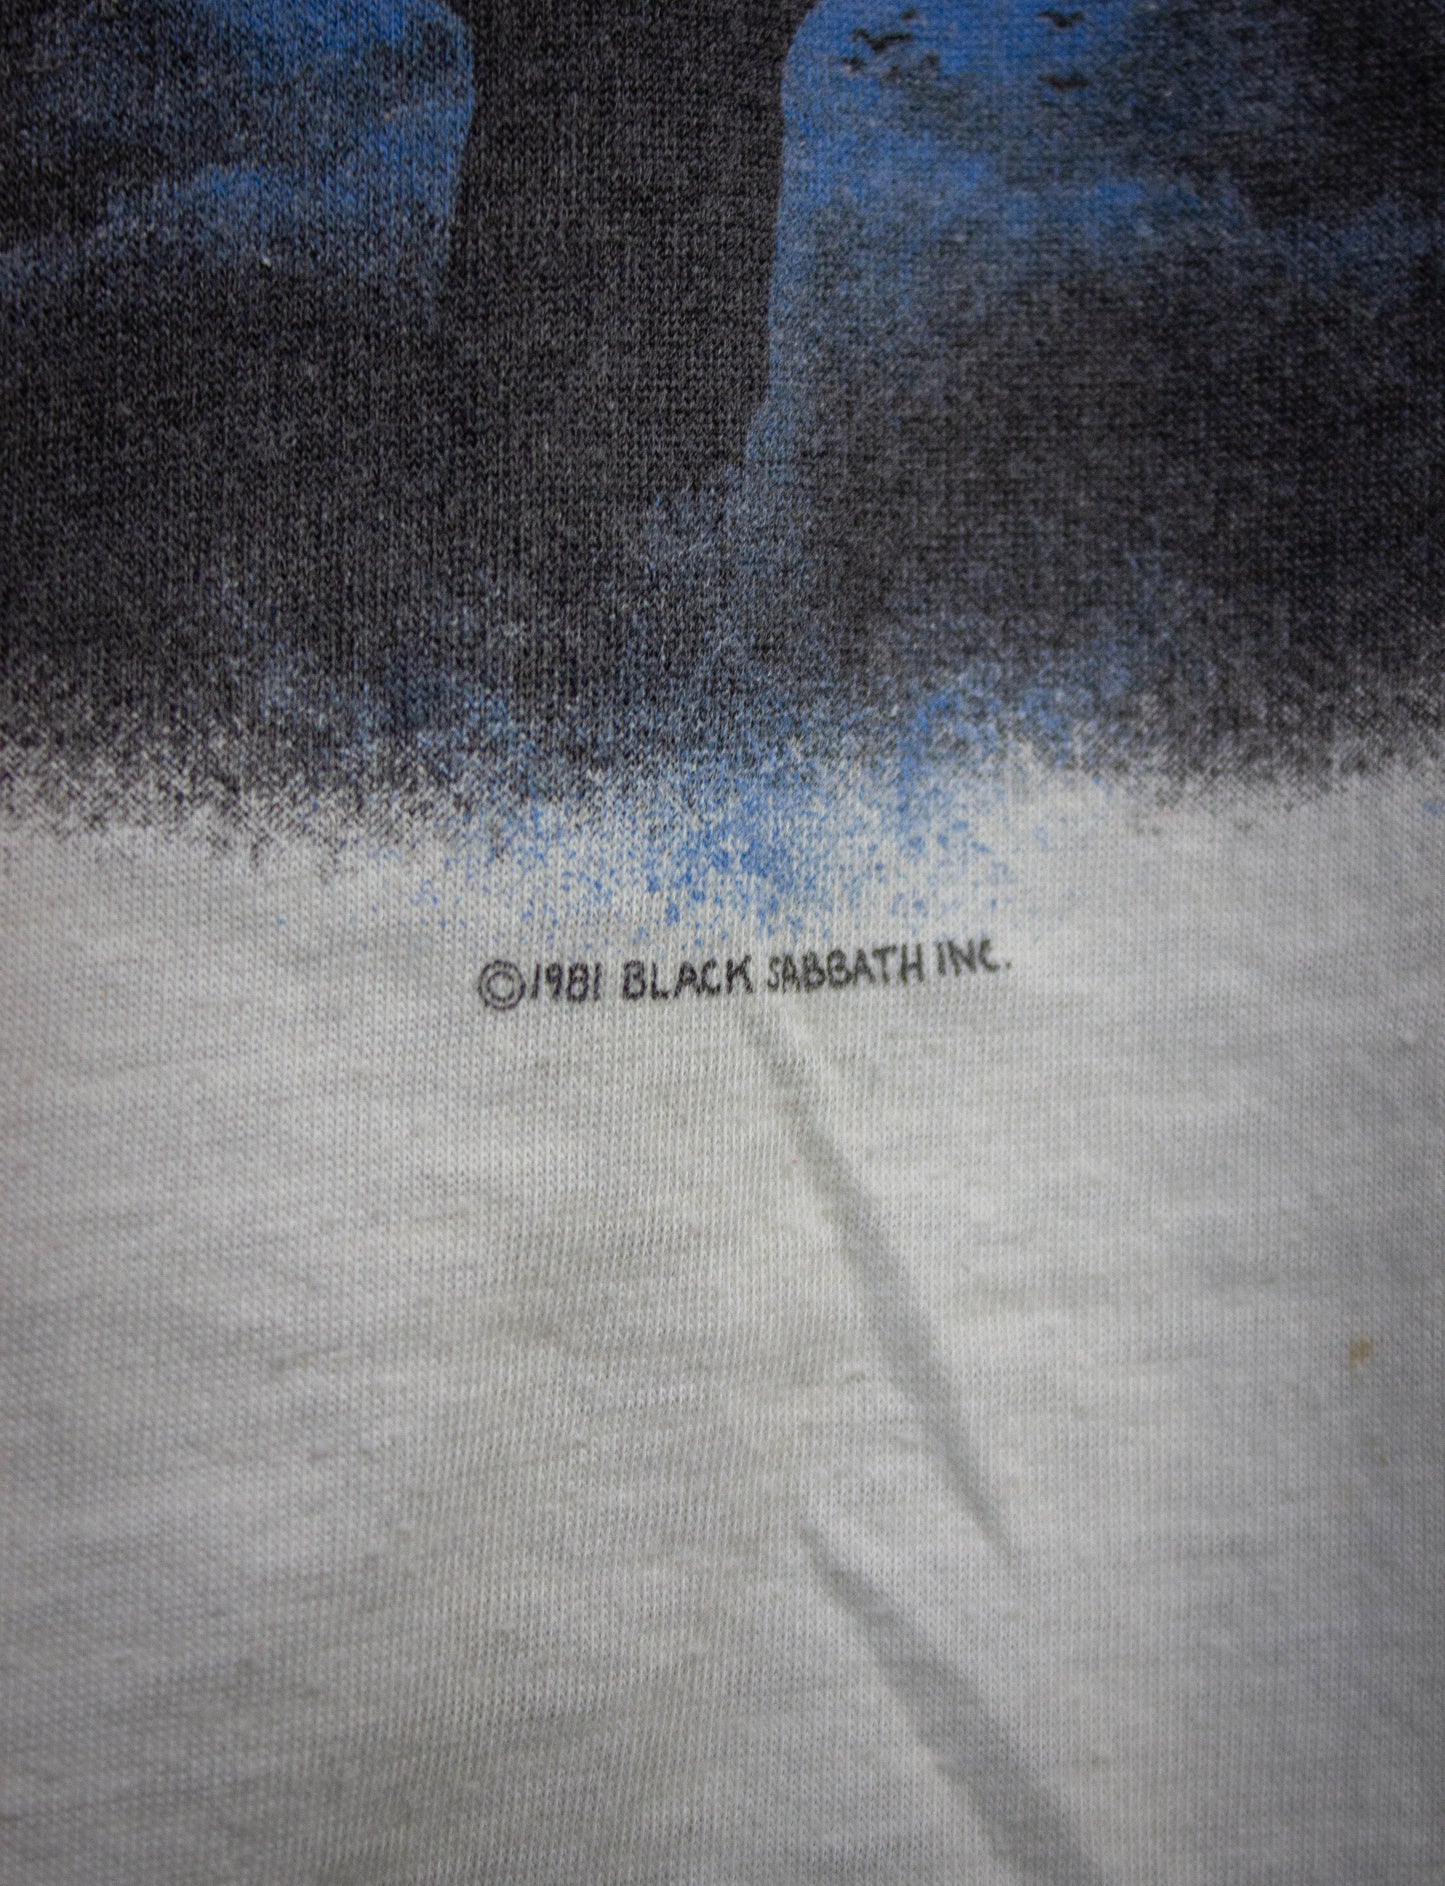 Vintage Black Sabbath Mob Rules Raglan Concert T Shirt 1981 Large